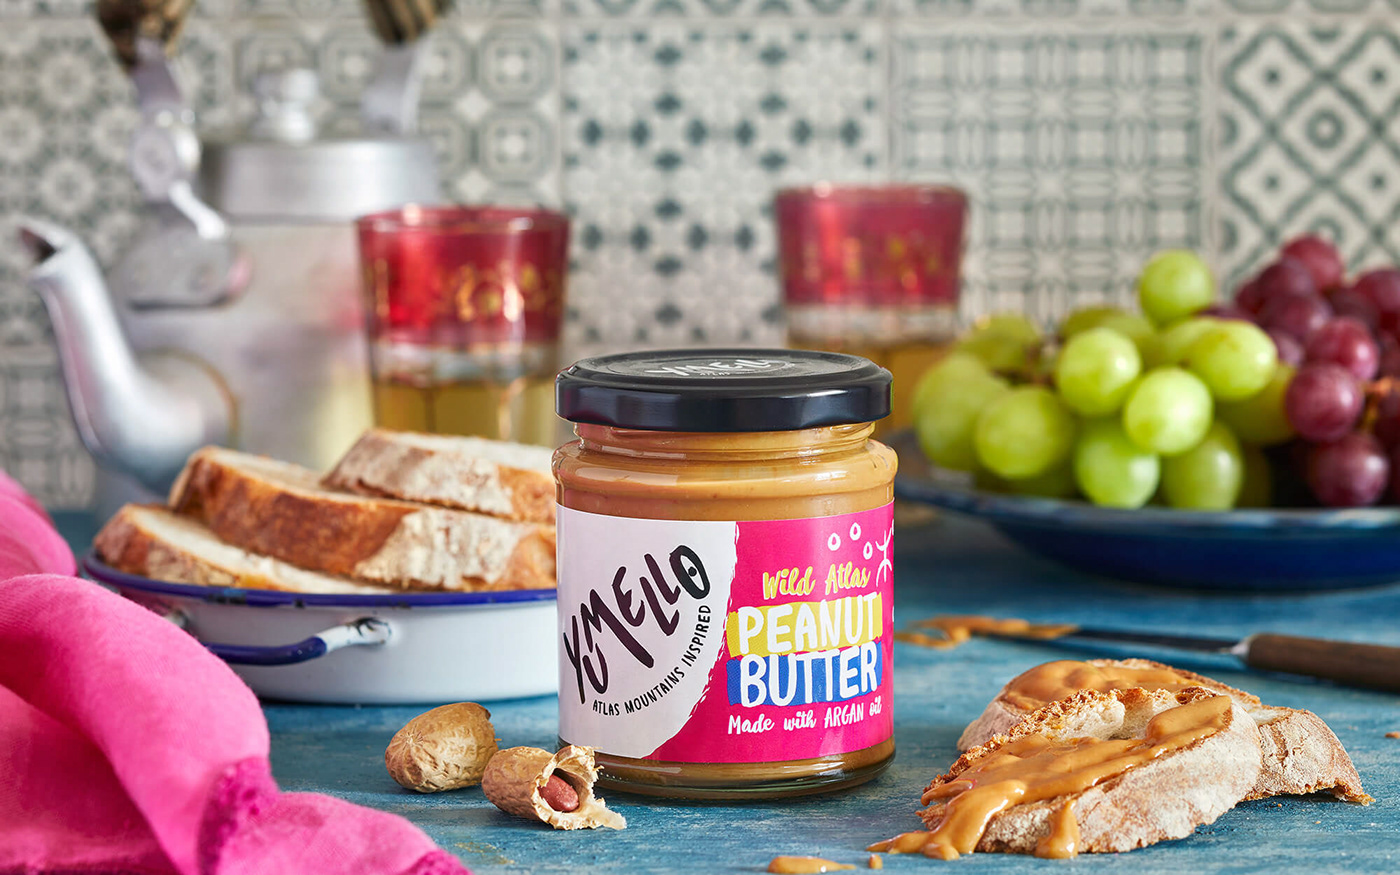 yumello Morocco peanut butter spreads Label jar sophia georgopoulou sophiagdotcom athens Food 